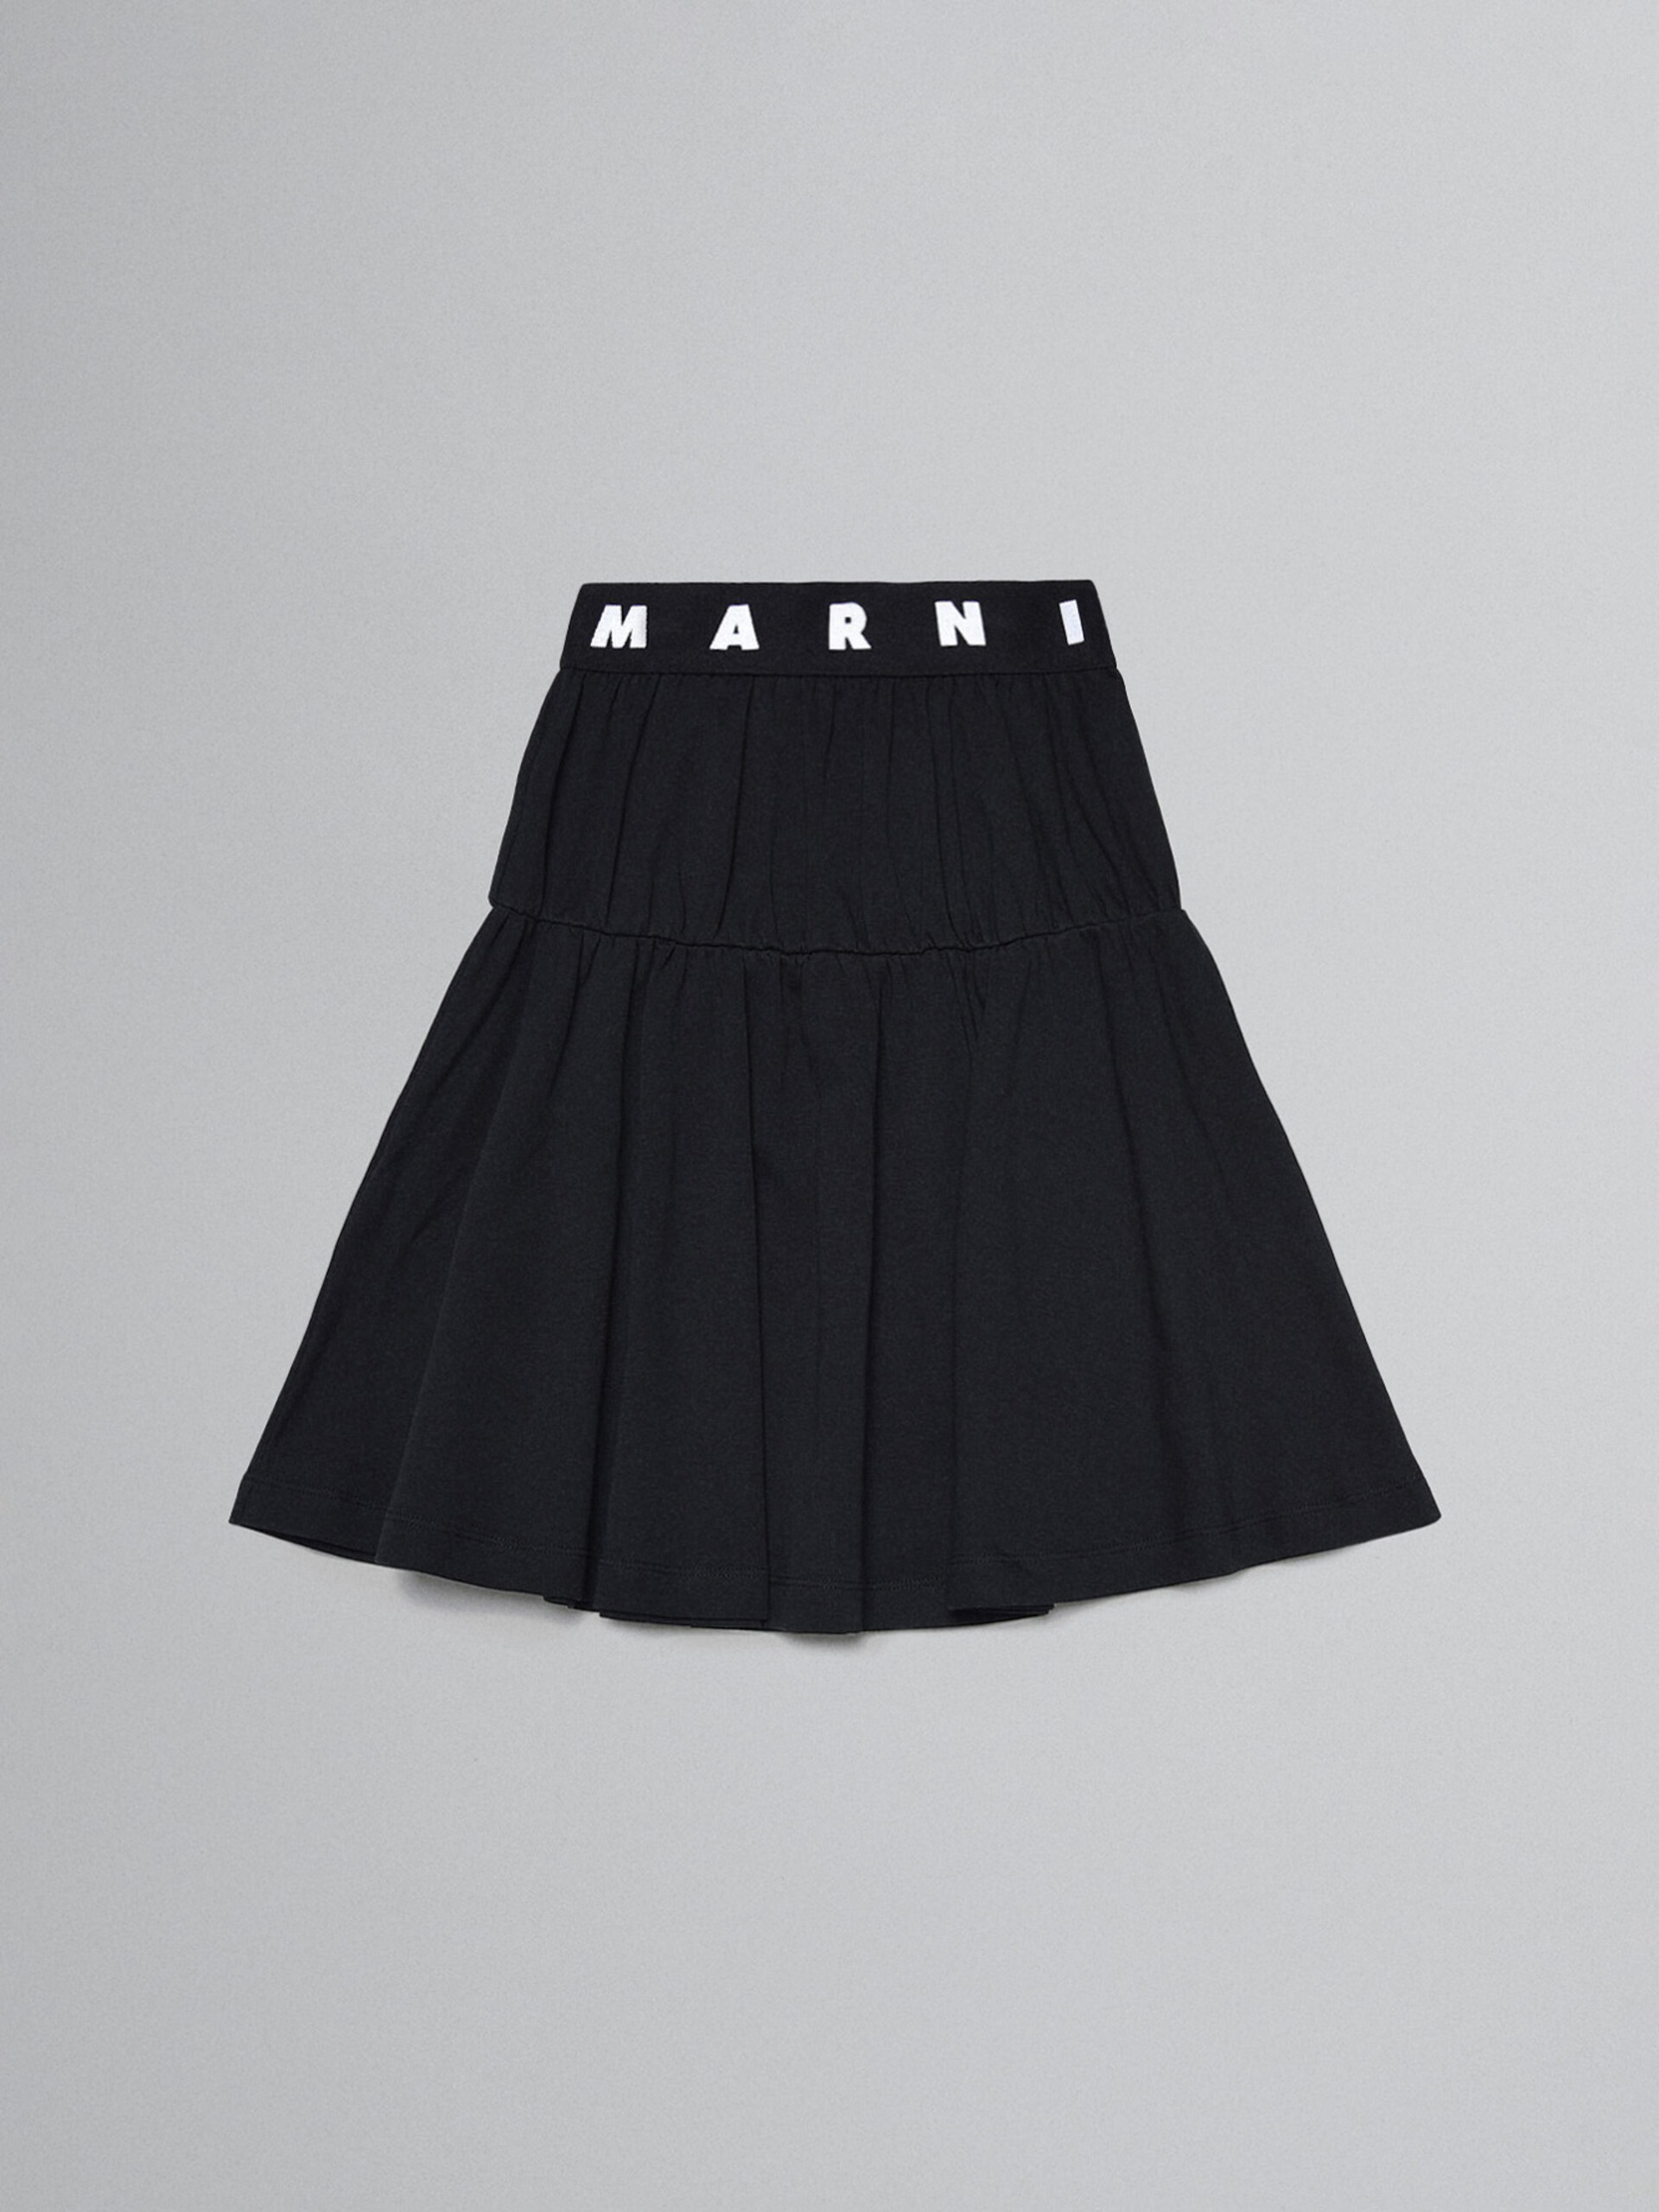 Black flounce skirt with logo waist - Skirts - Image 1